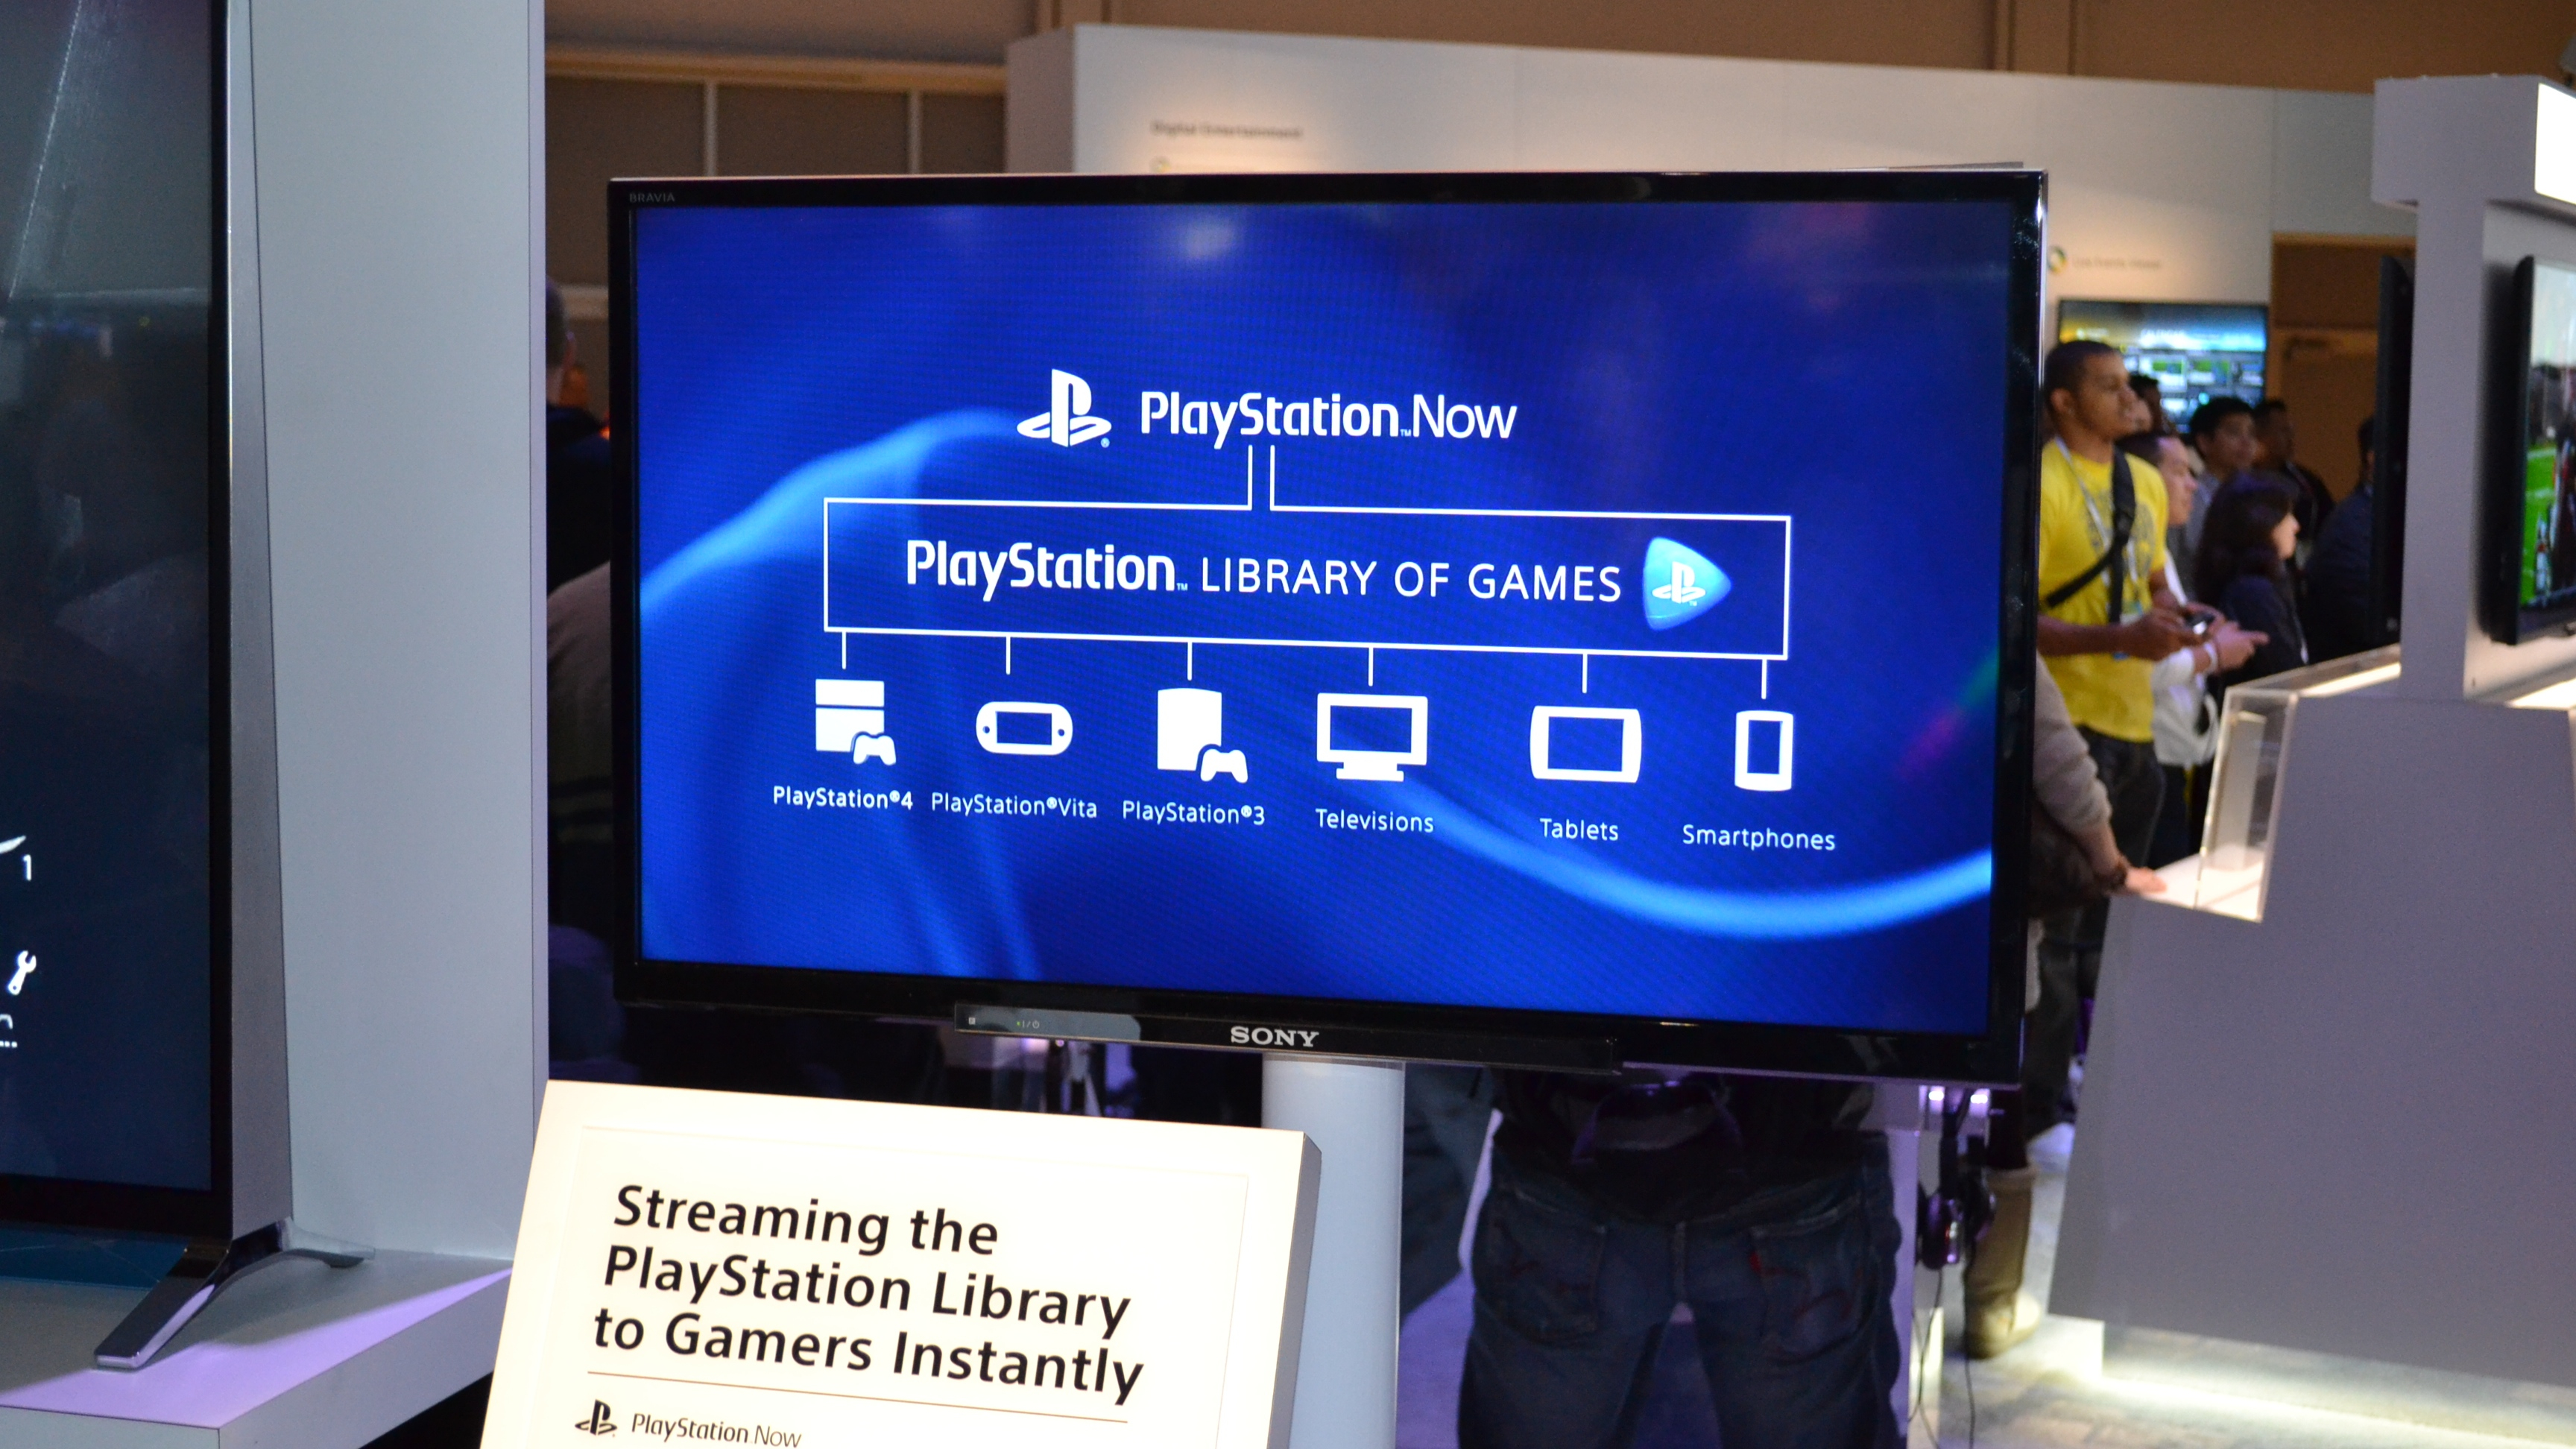 huichelarij glas Stadscentrum These new Sony Bravia 4K TVs can stream PS3 games via PlayStation Now |  TechRadar